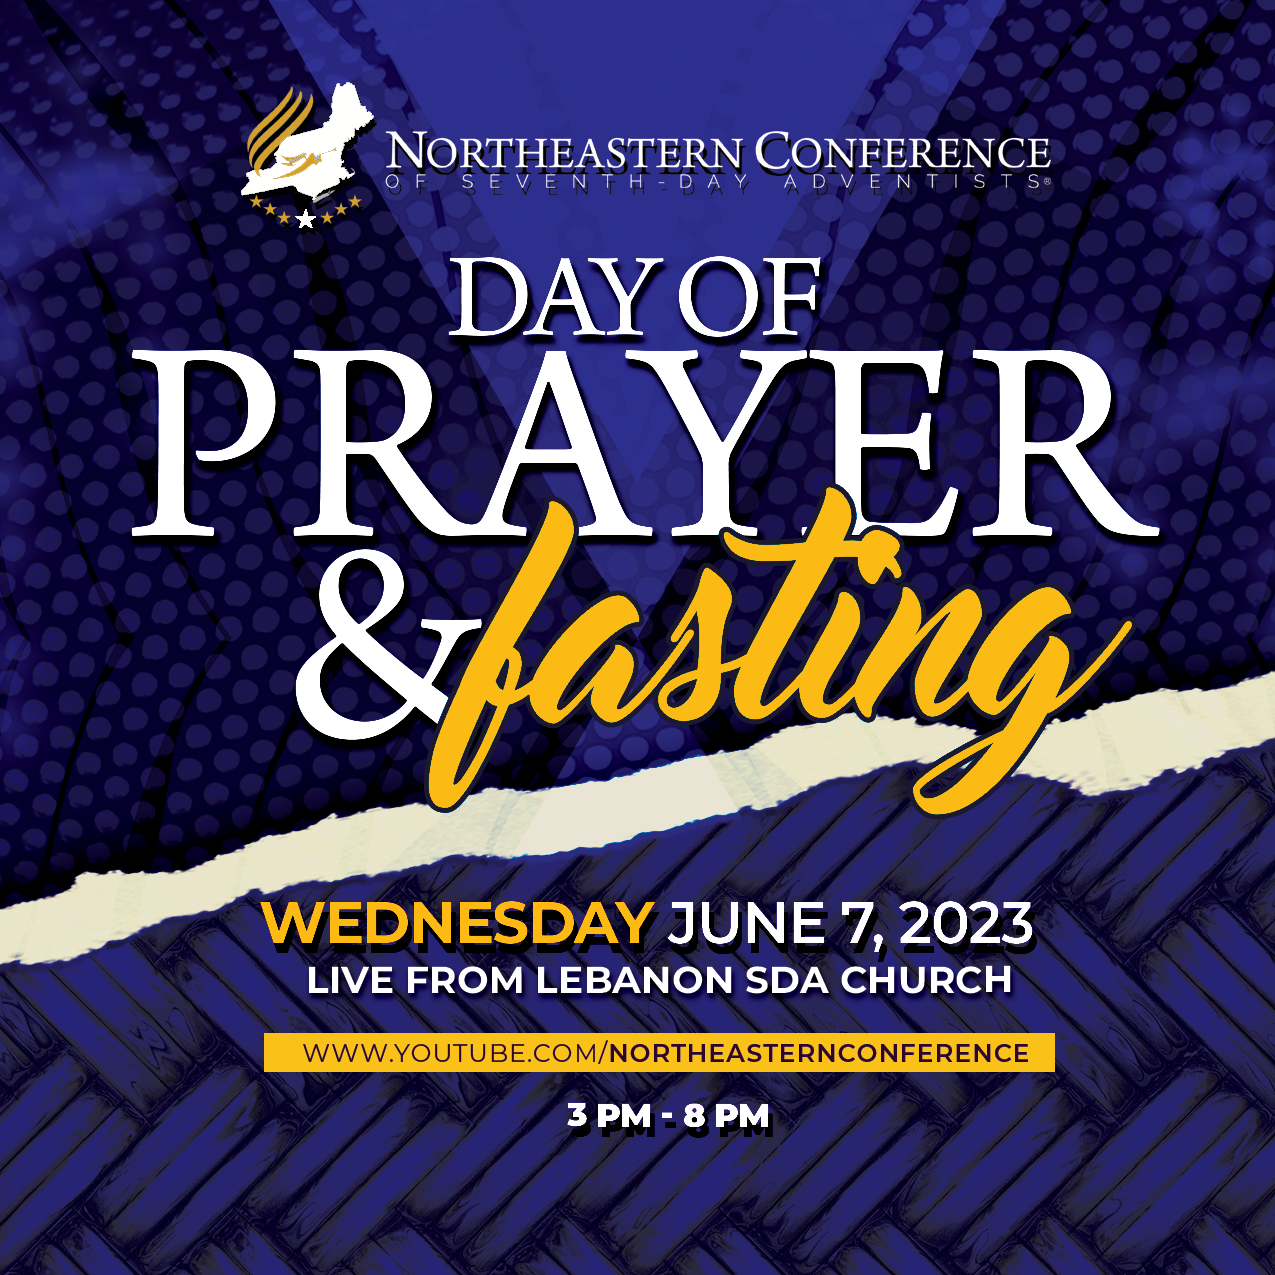 Day of Prayer & Fasting for June 7, 2023